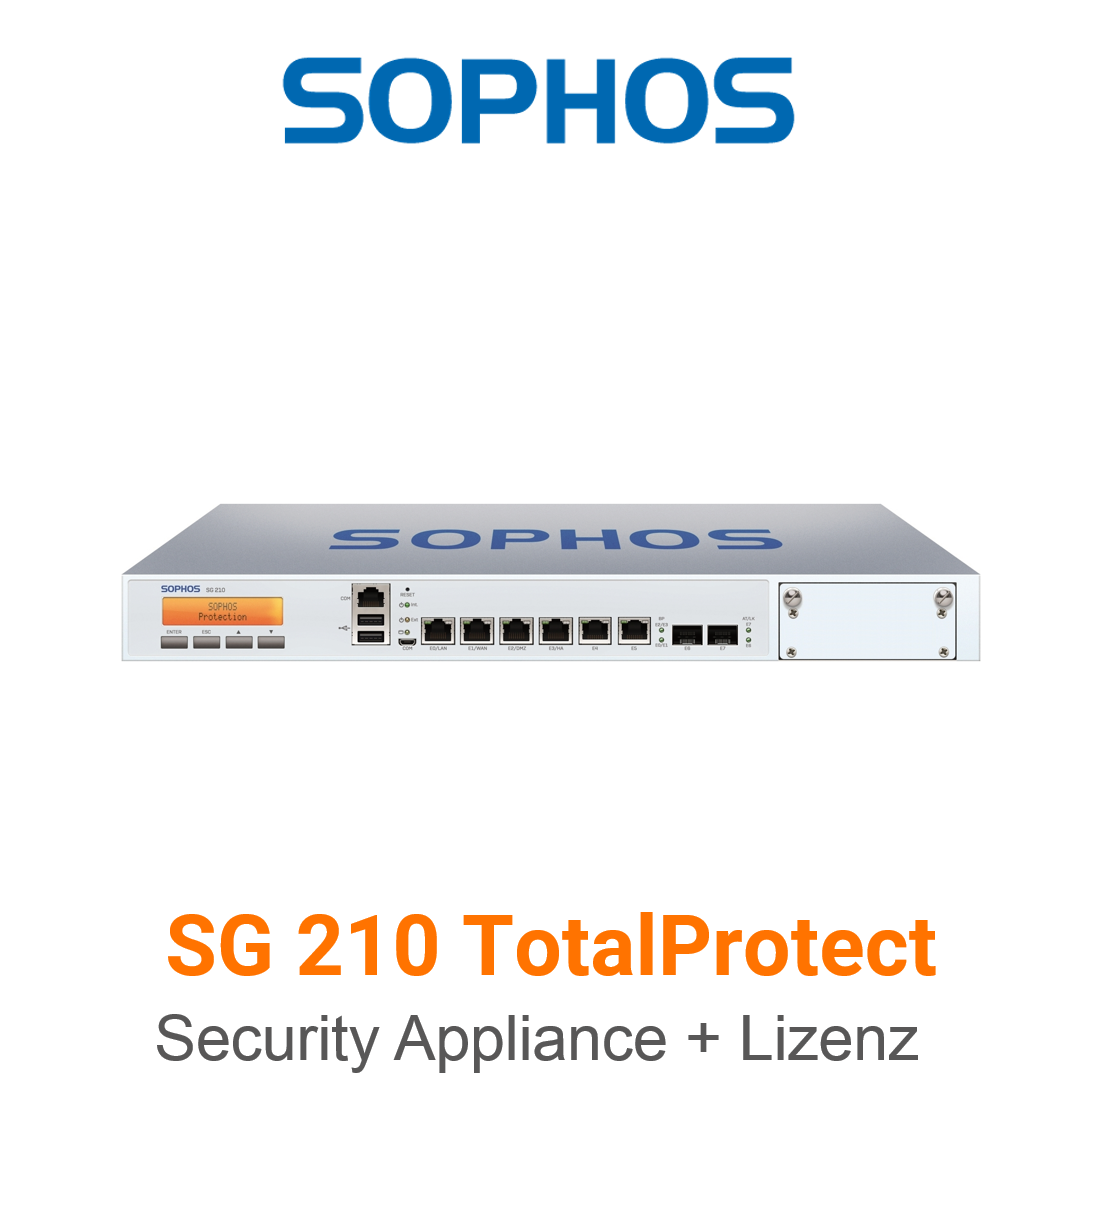 Sophos SG 210 TotalProtect Bundle (End of Sale/Life)